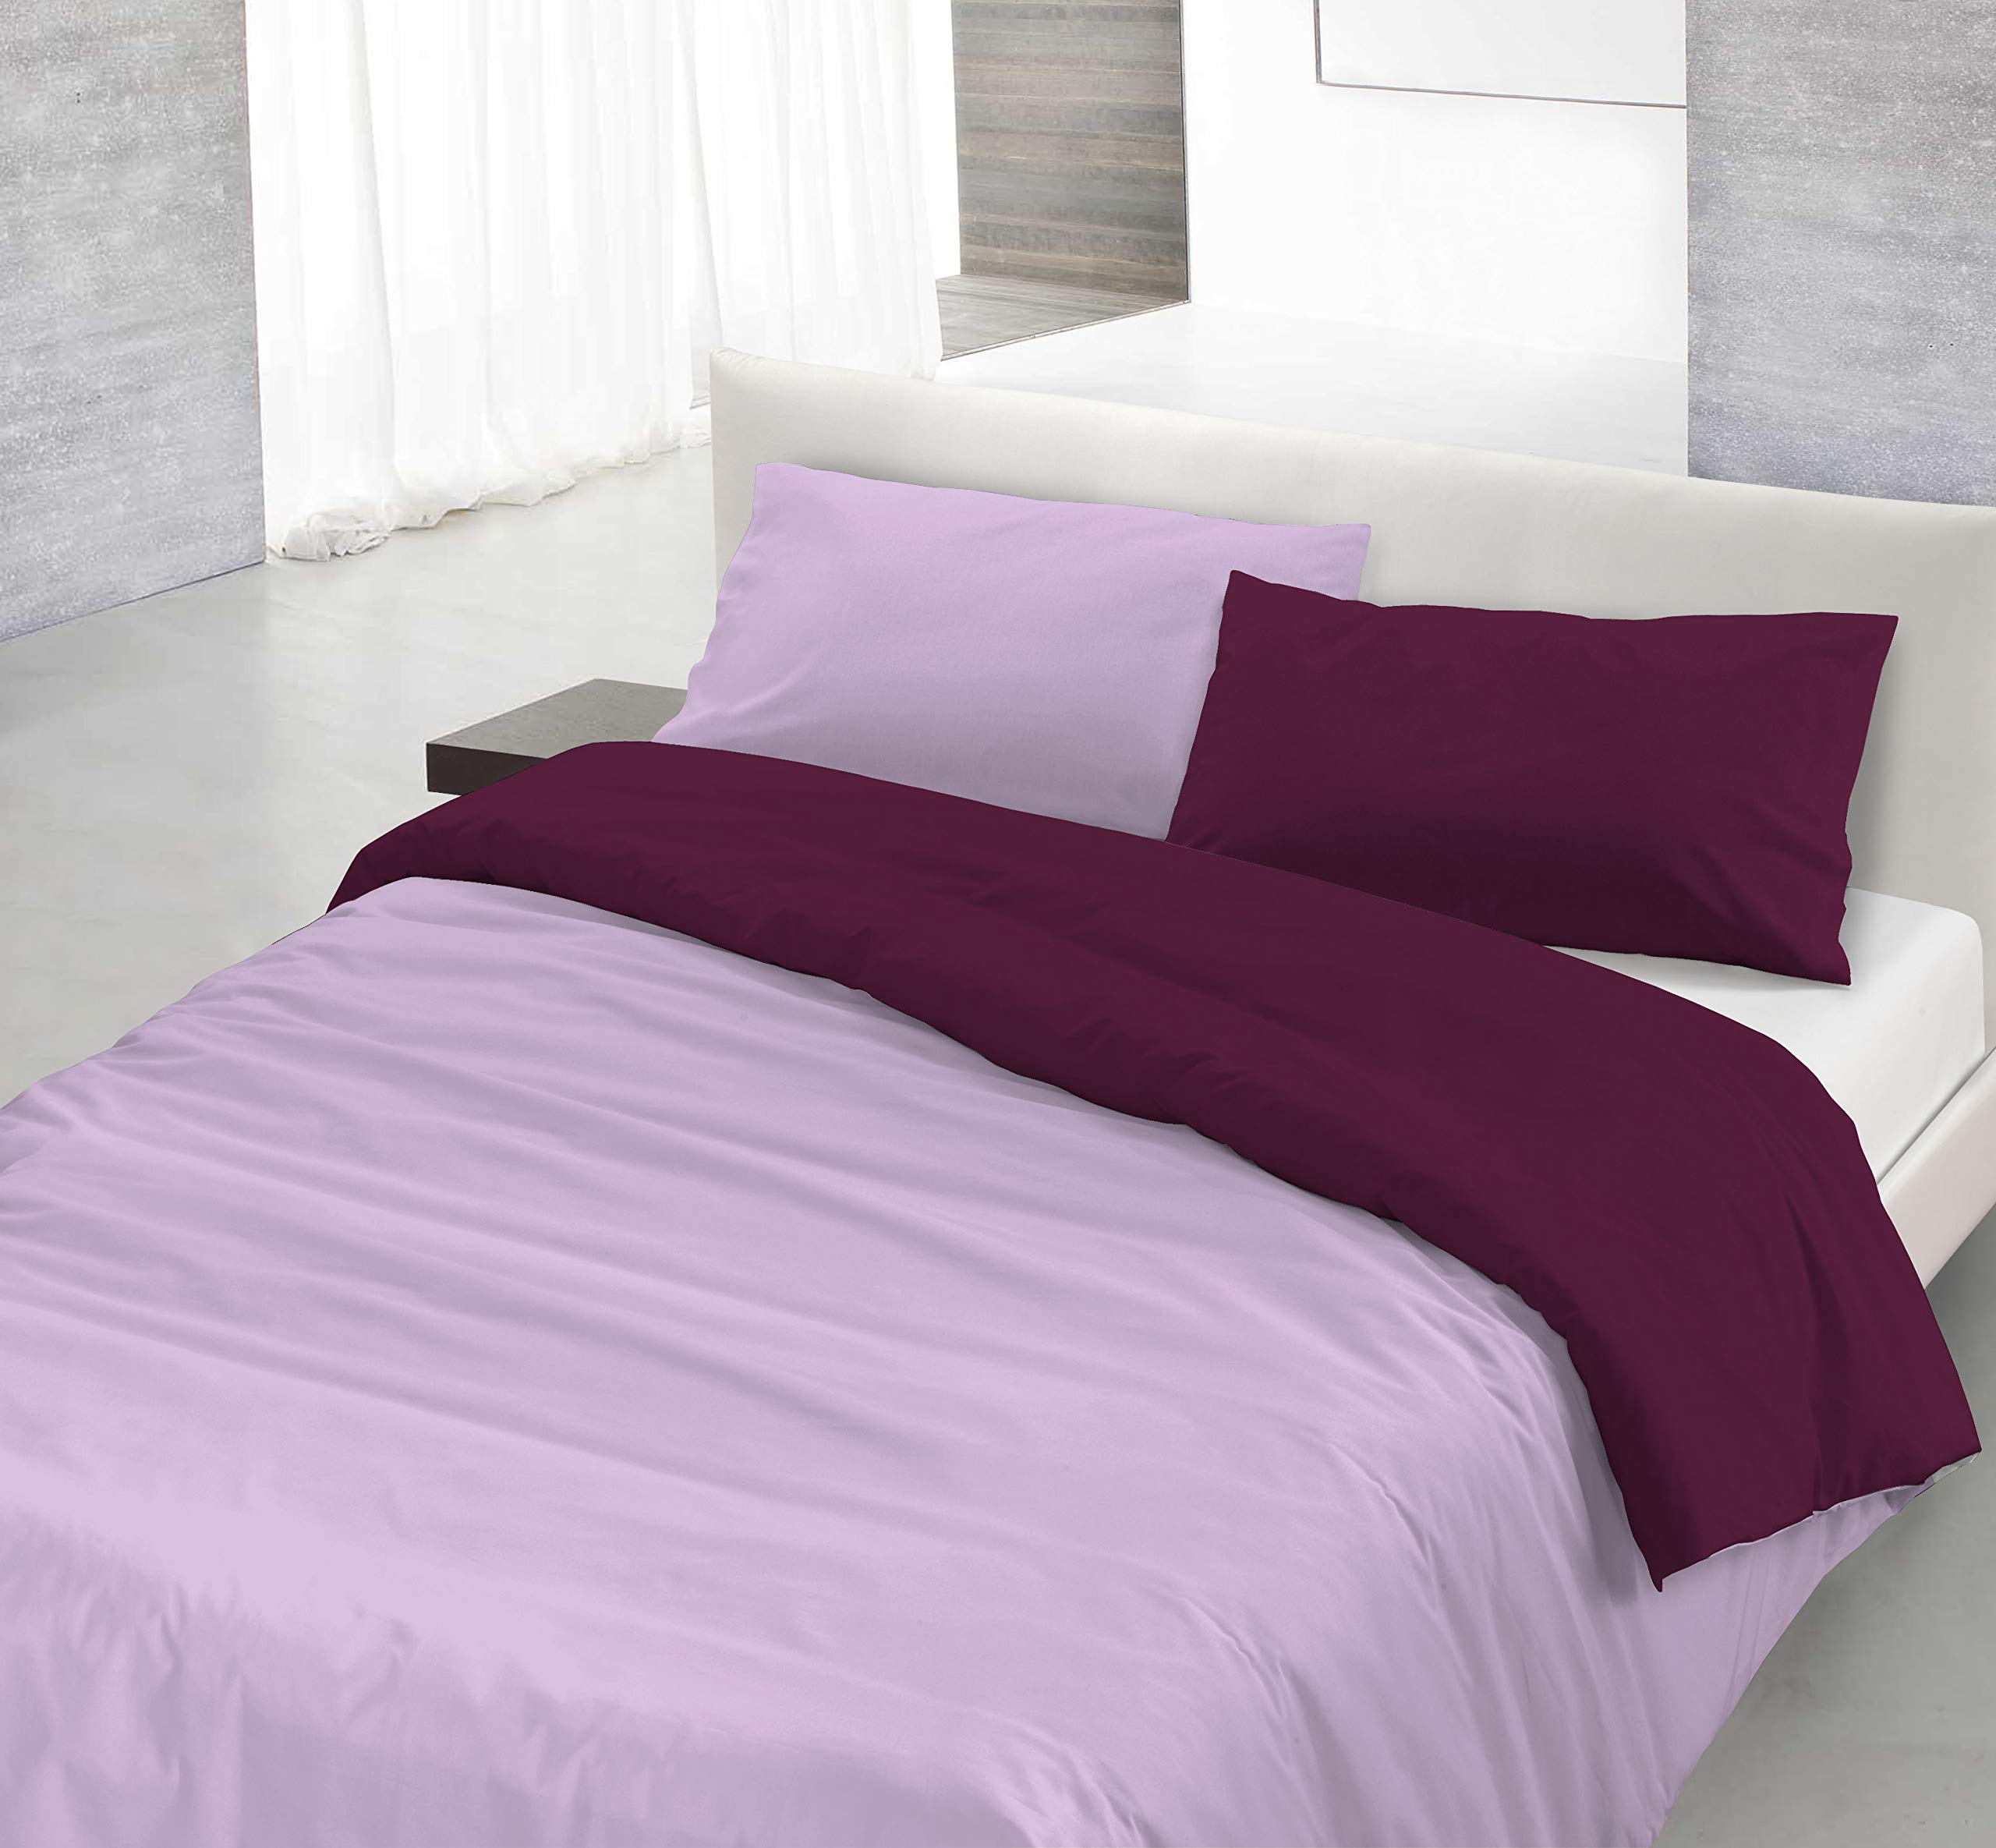 Italian Bed Linen Natural Color Doubleface Bettbezug, 100% Baumwolle, Lila/Pflaume, kleine Doppelte